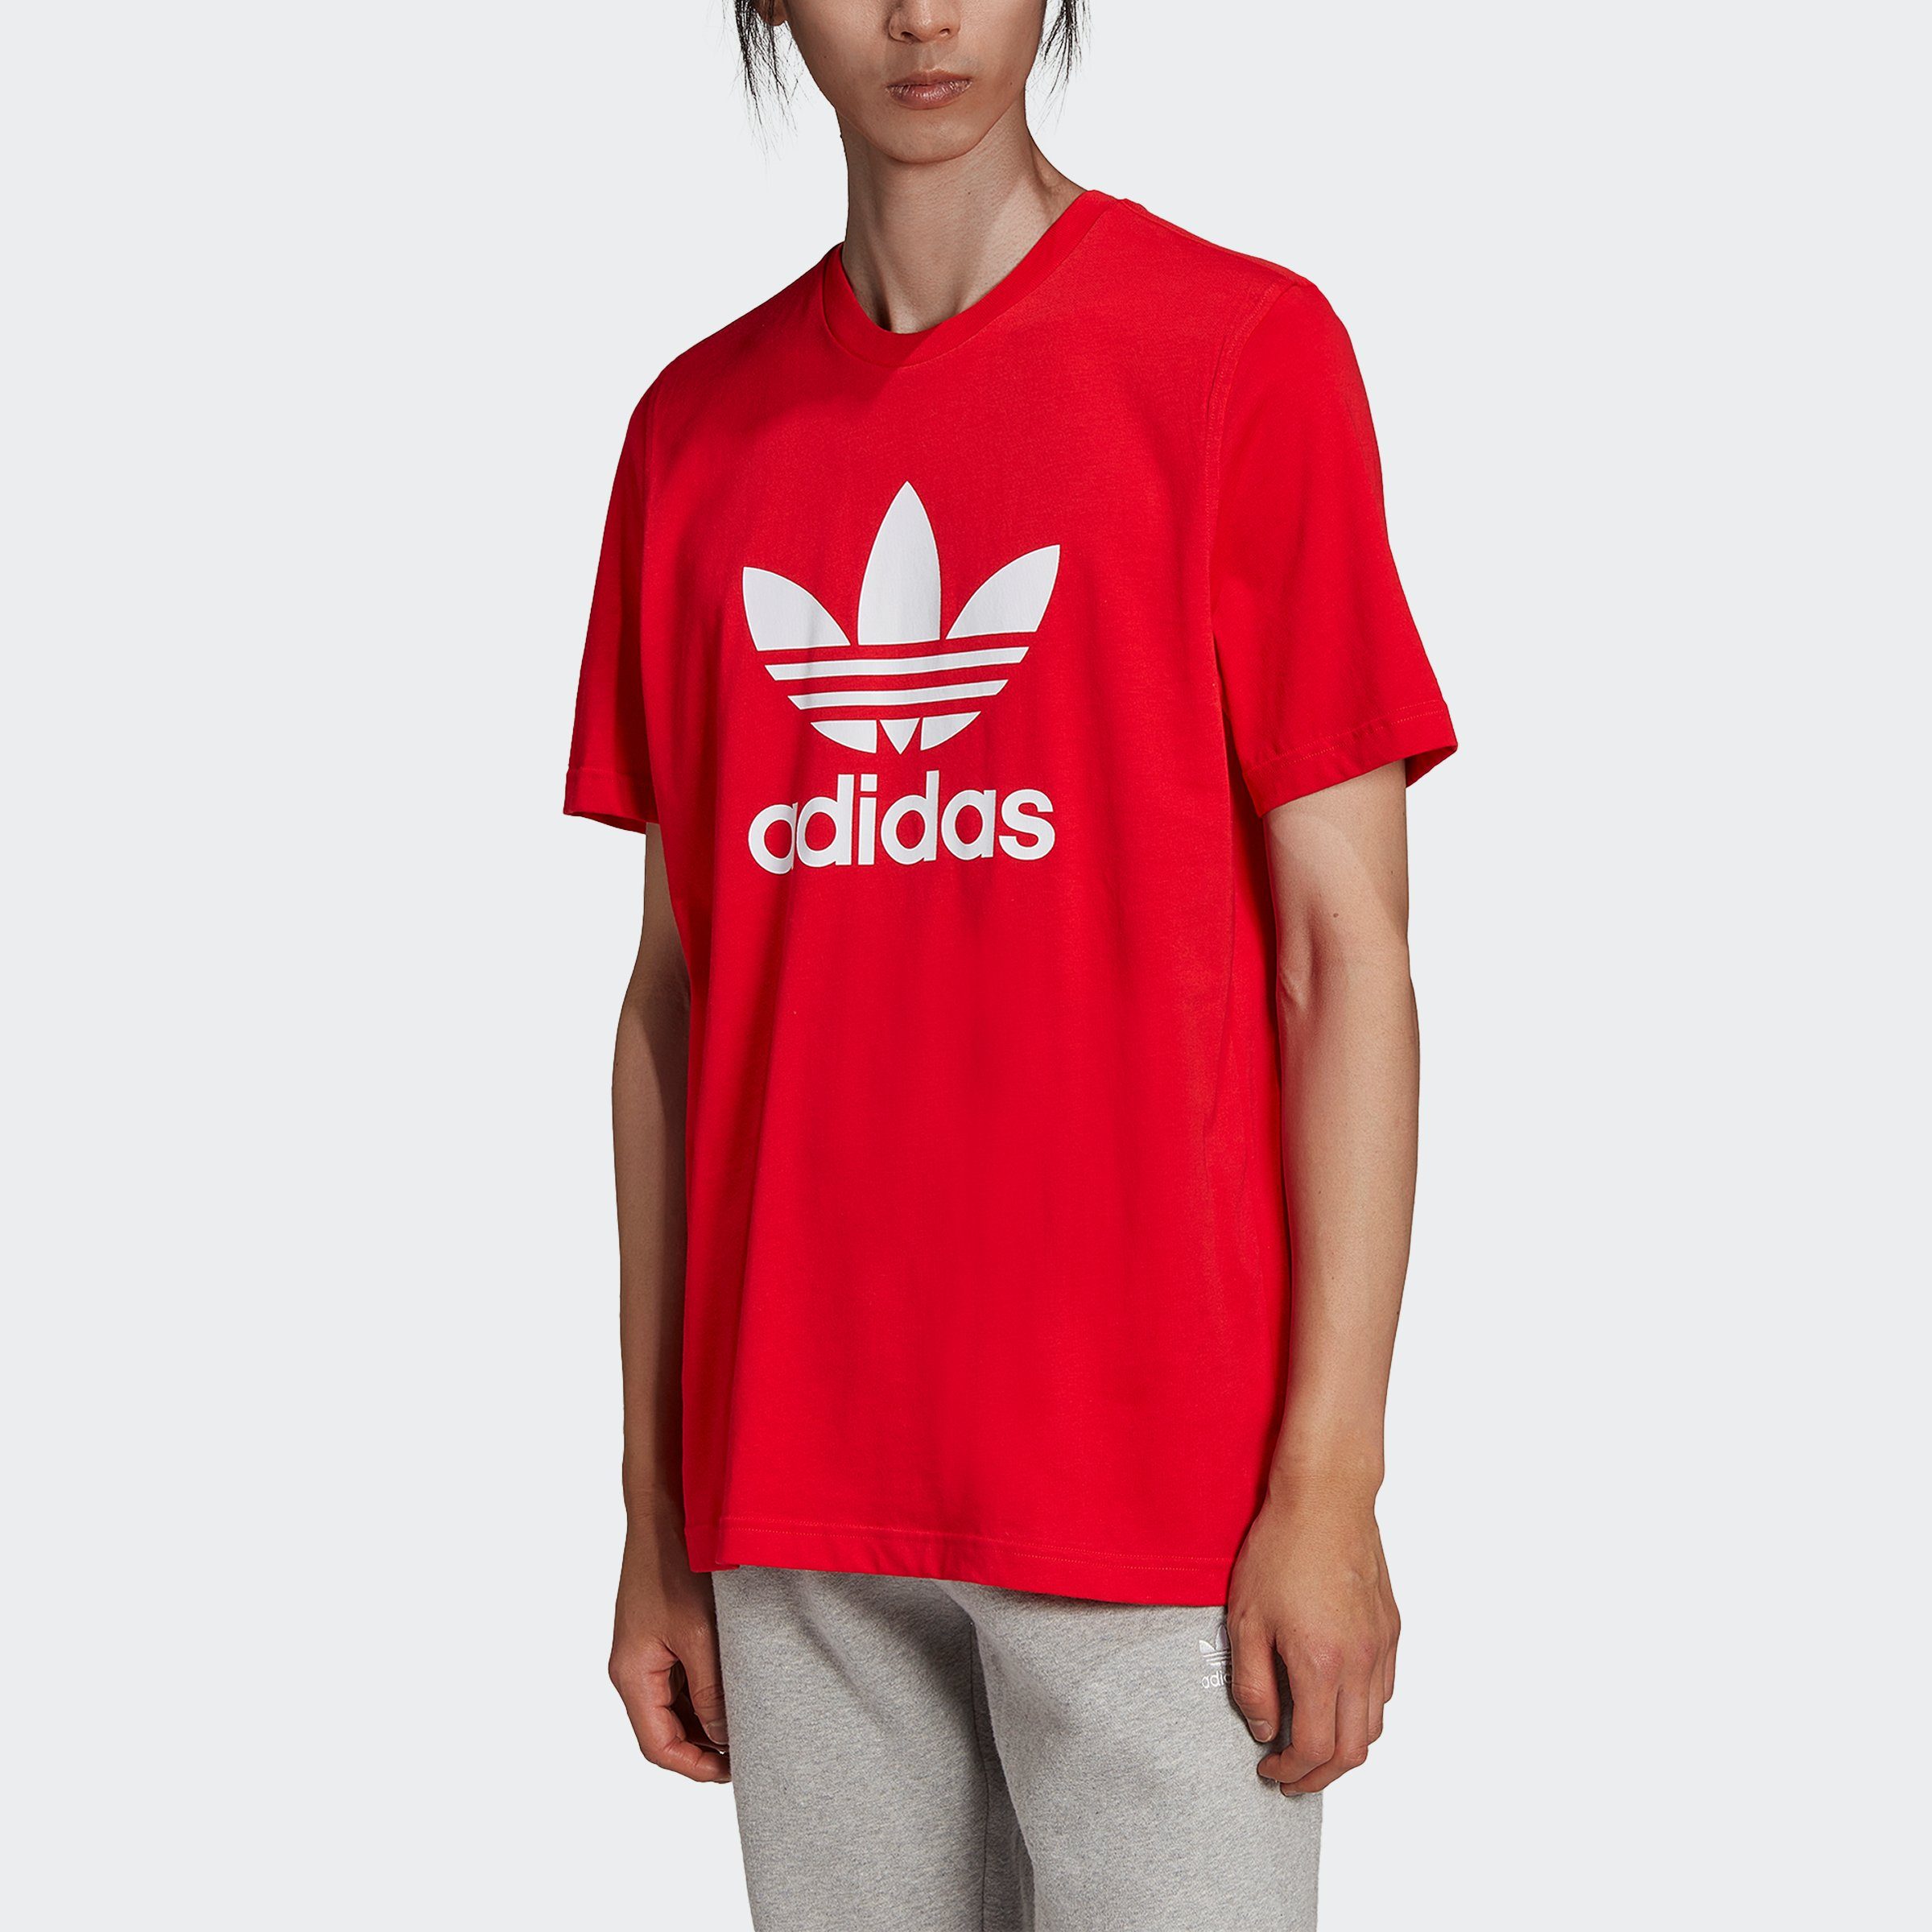 adidas Originals T-Shirt ADICOLOR CLASSICS TREFOIL, Ein lässiges T-Shirt  mit angesagtem adidas Style.